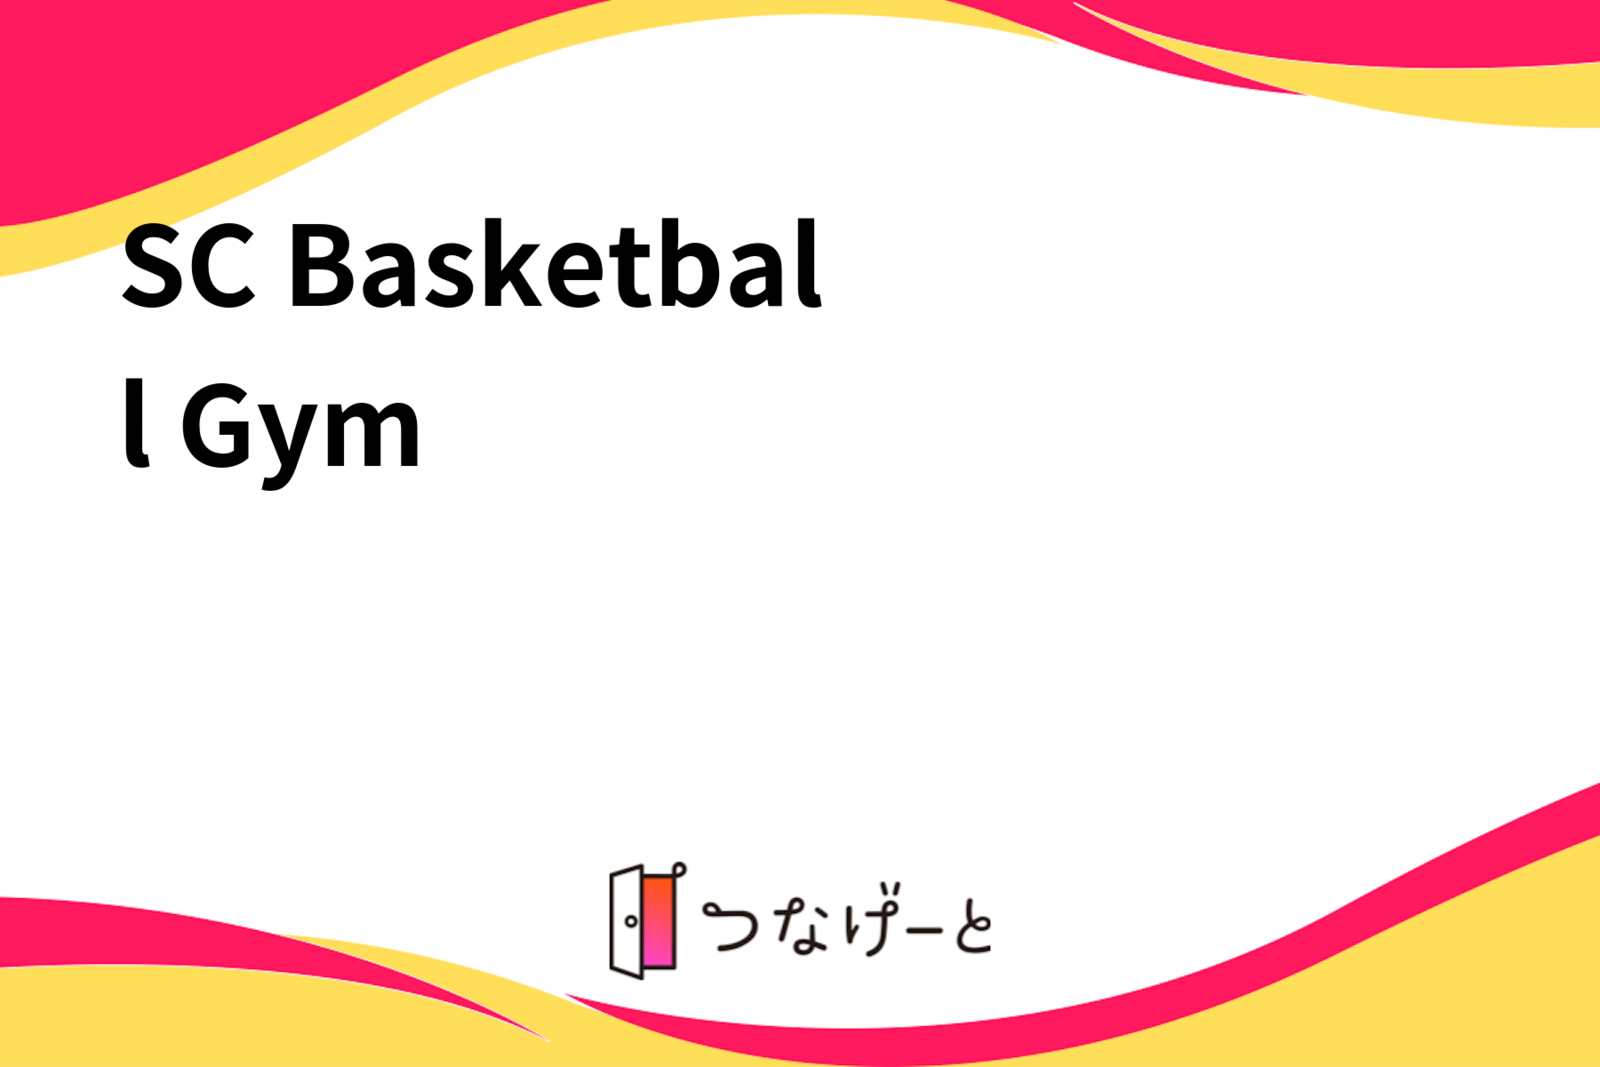 SC Basketball Gym